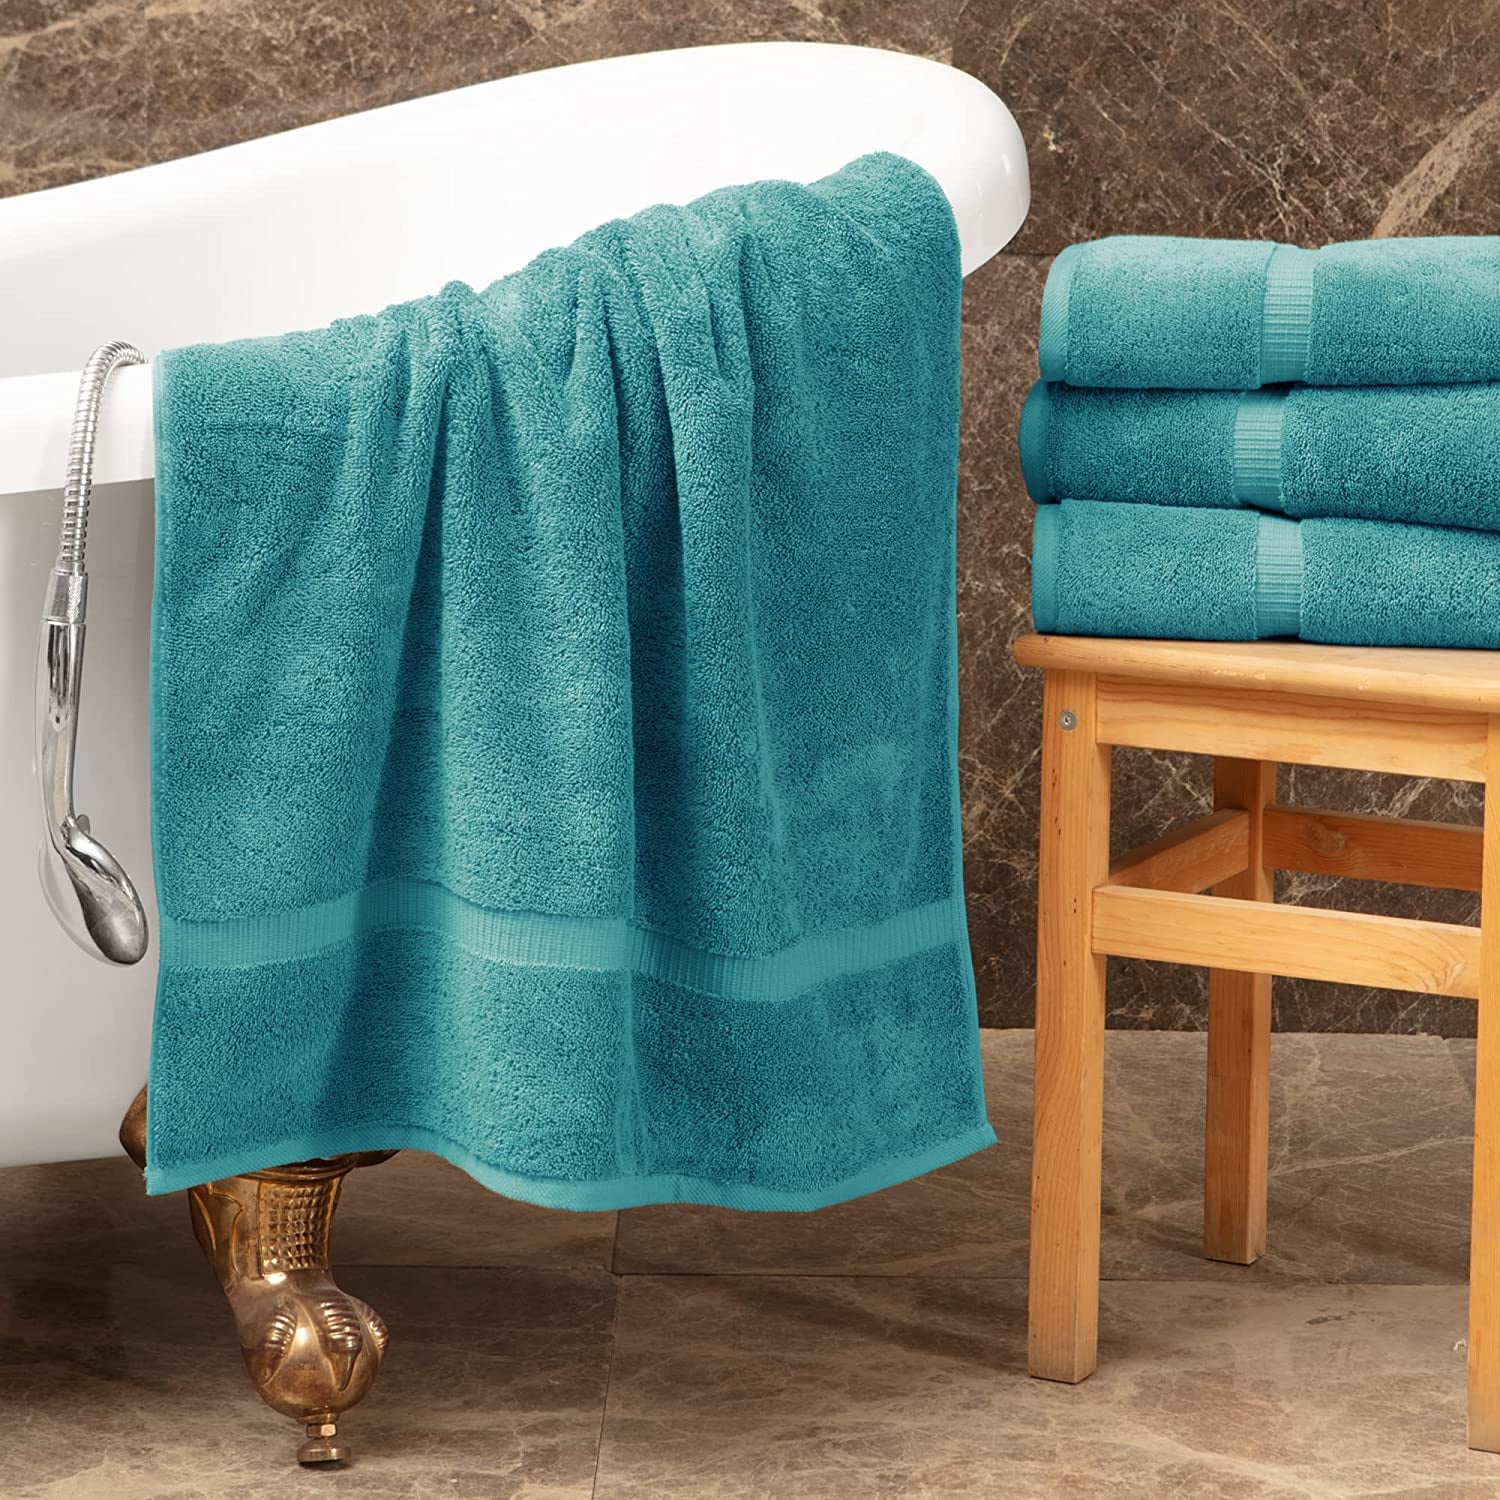 Premium Turkish Cotton Super Soft and Absorbent Towels (8-Piece Towel Set, Aqua Blue)